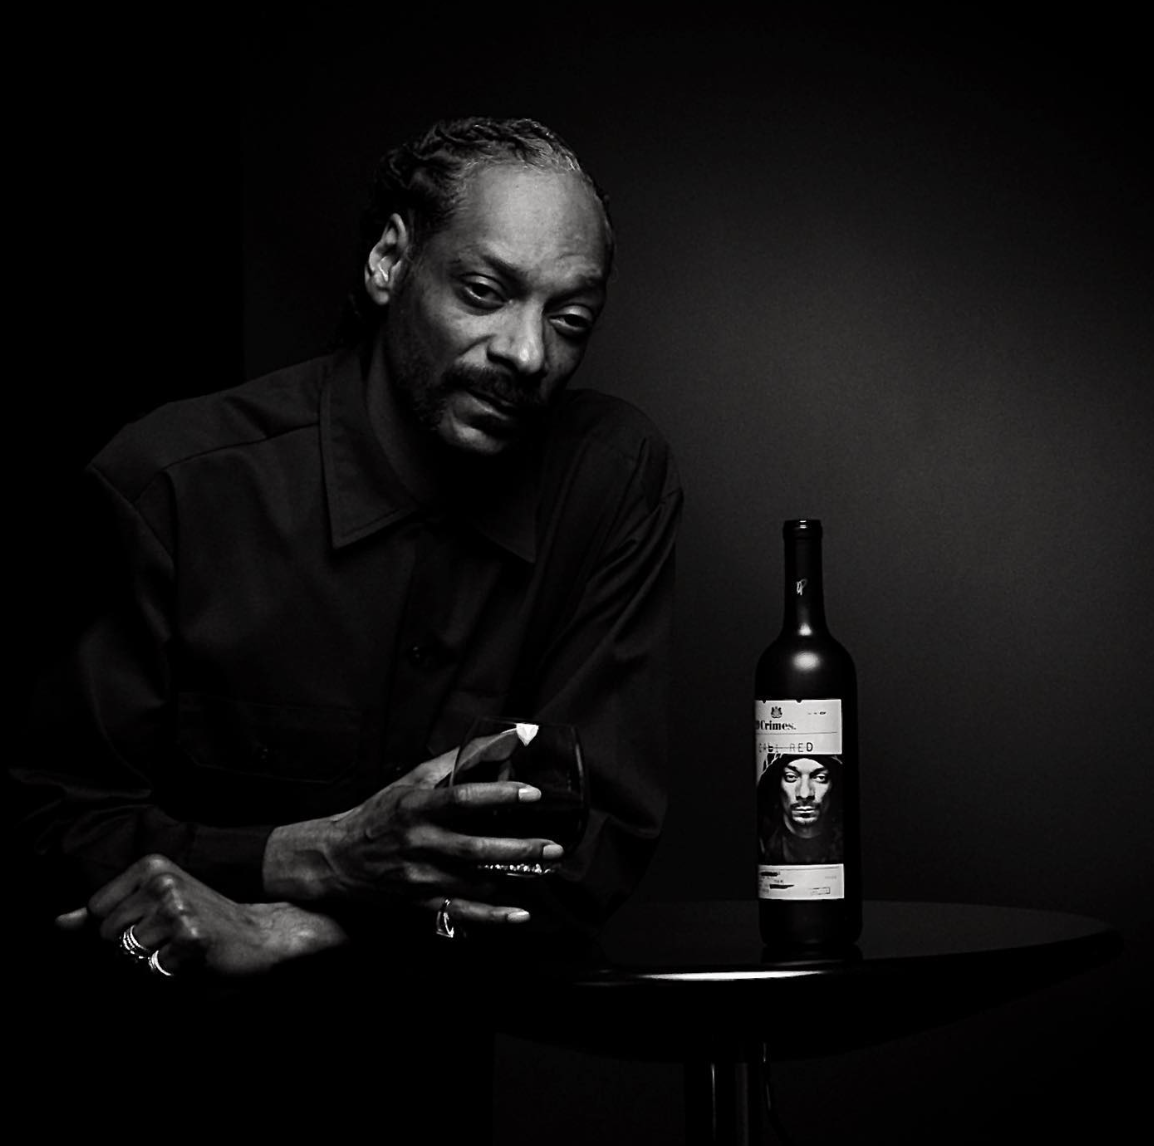 Snoop Dogg has an unbelievably high IQ